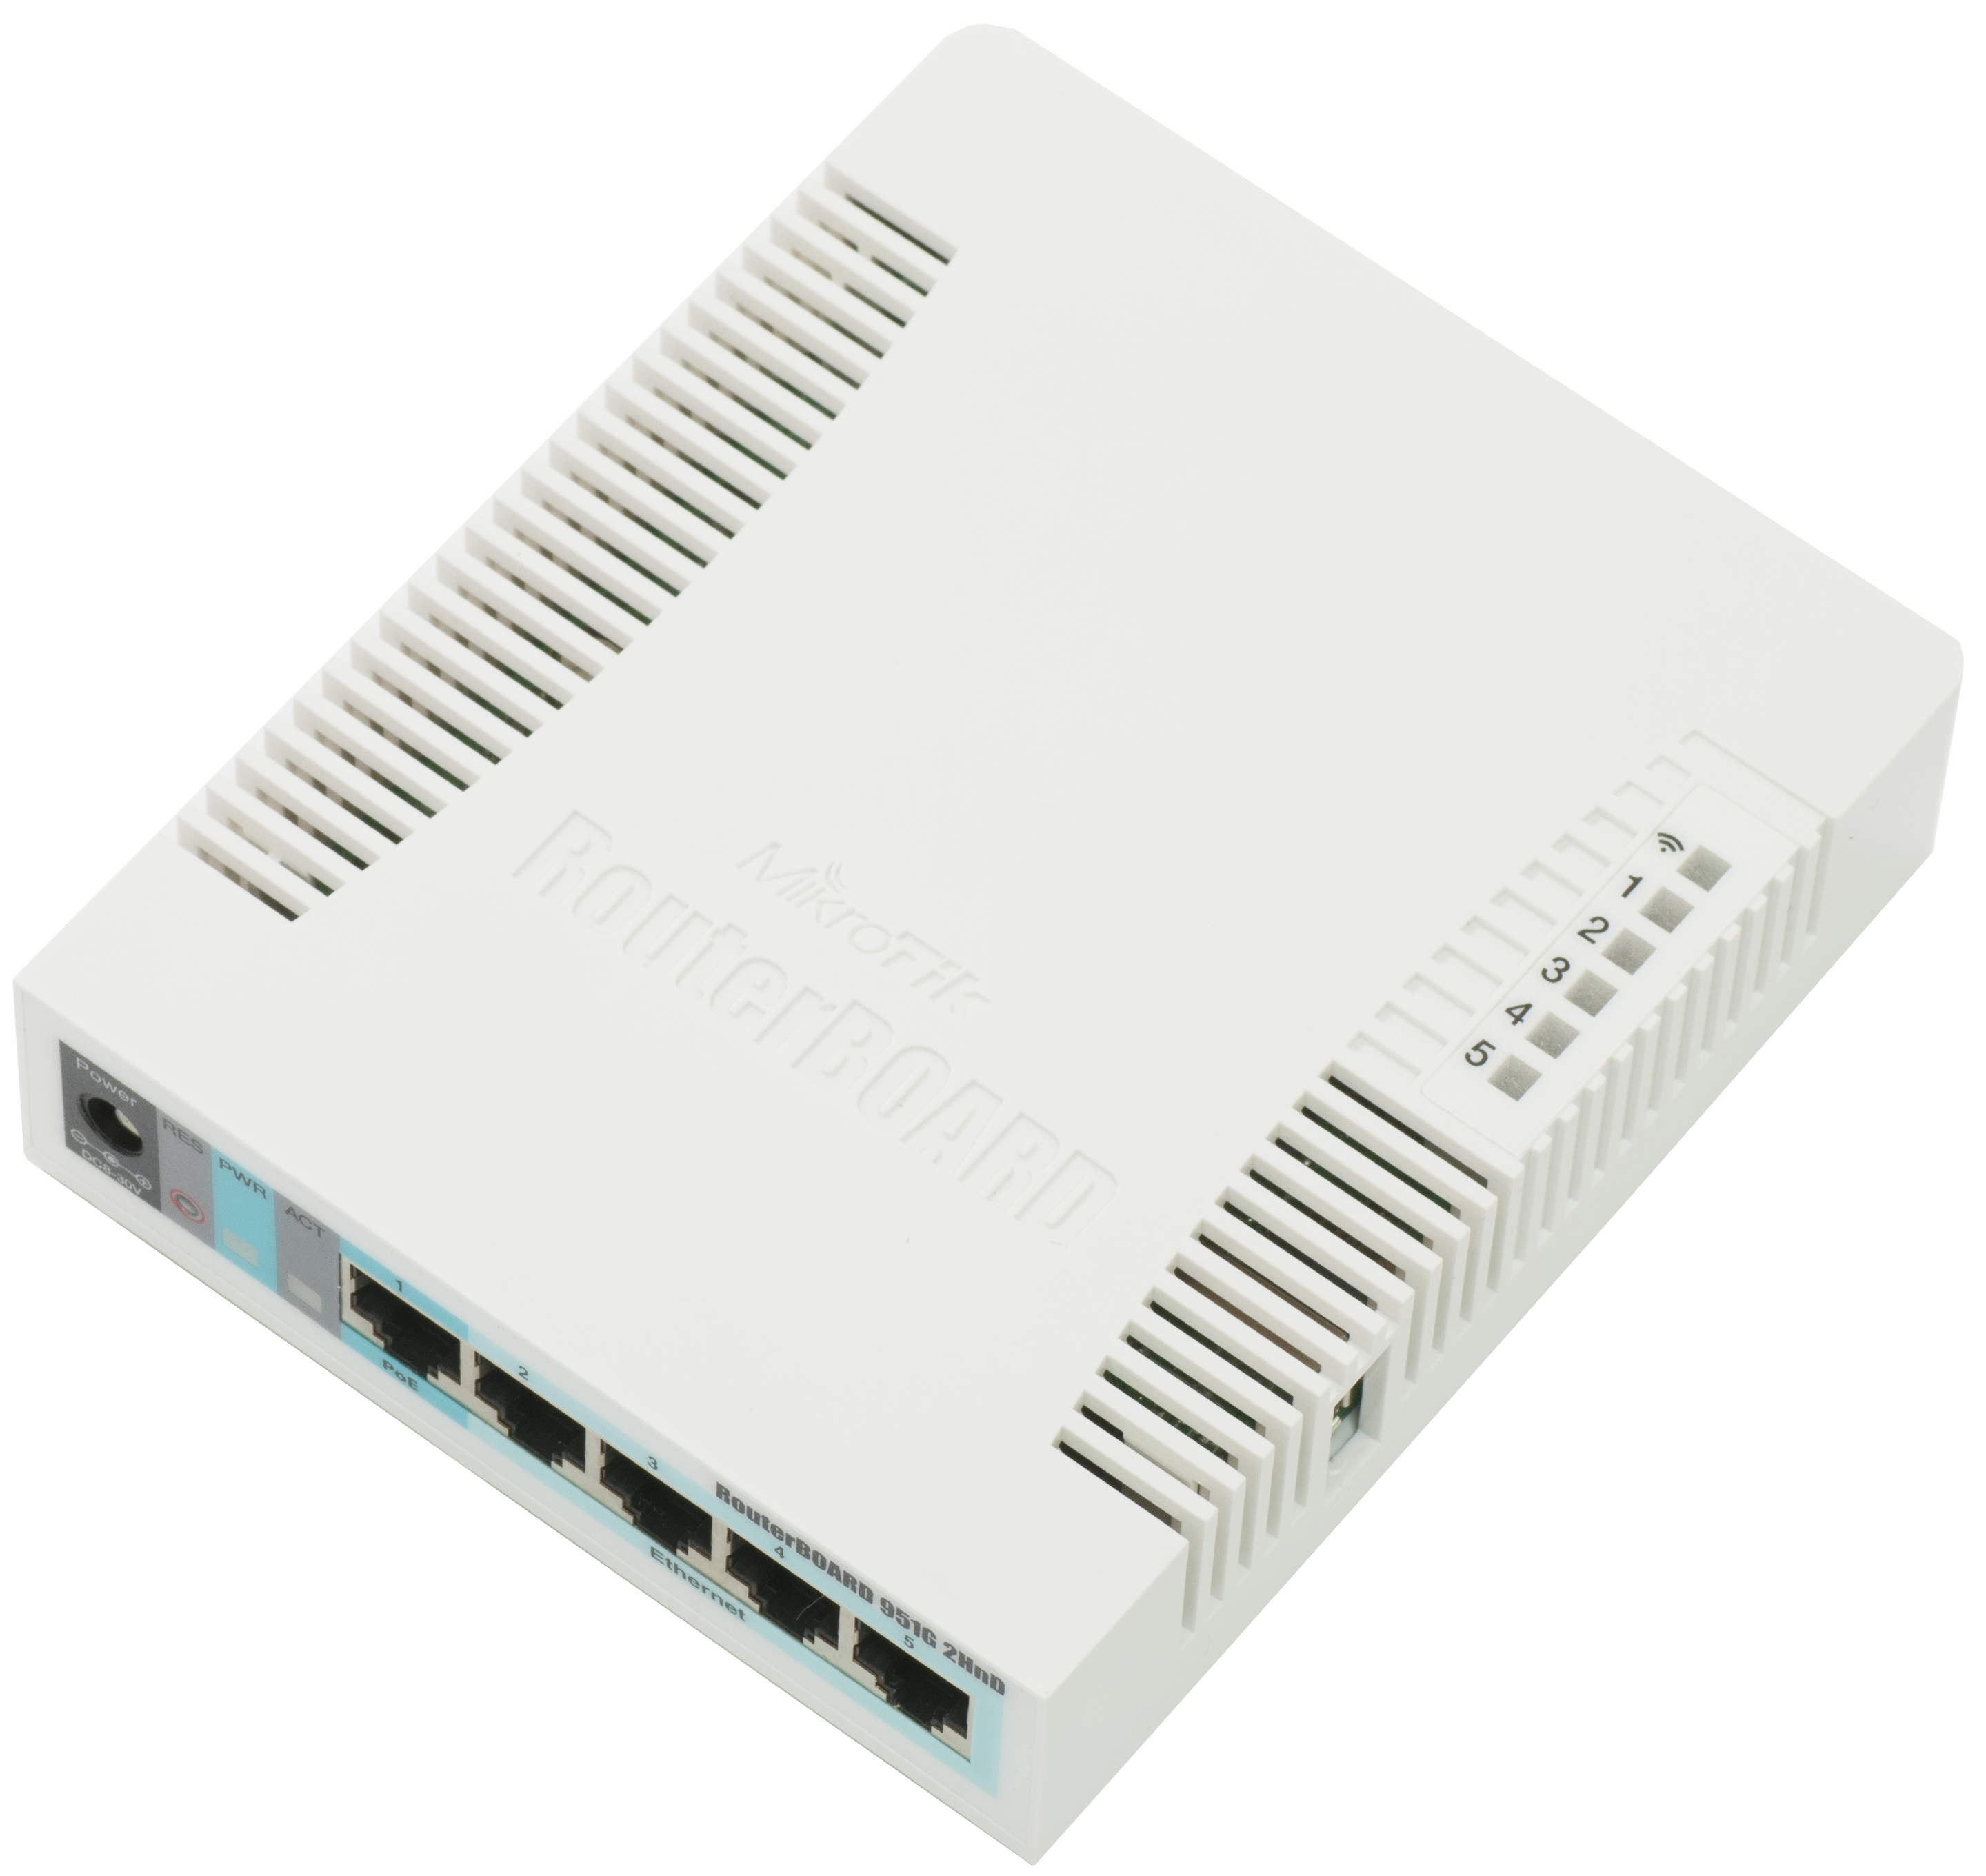 MikroTik Mikrotik 951-2n Access point hotspot wifi wlan wireless router board routerboard 